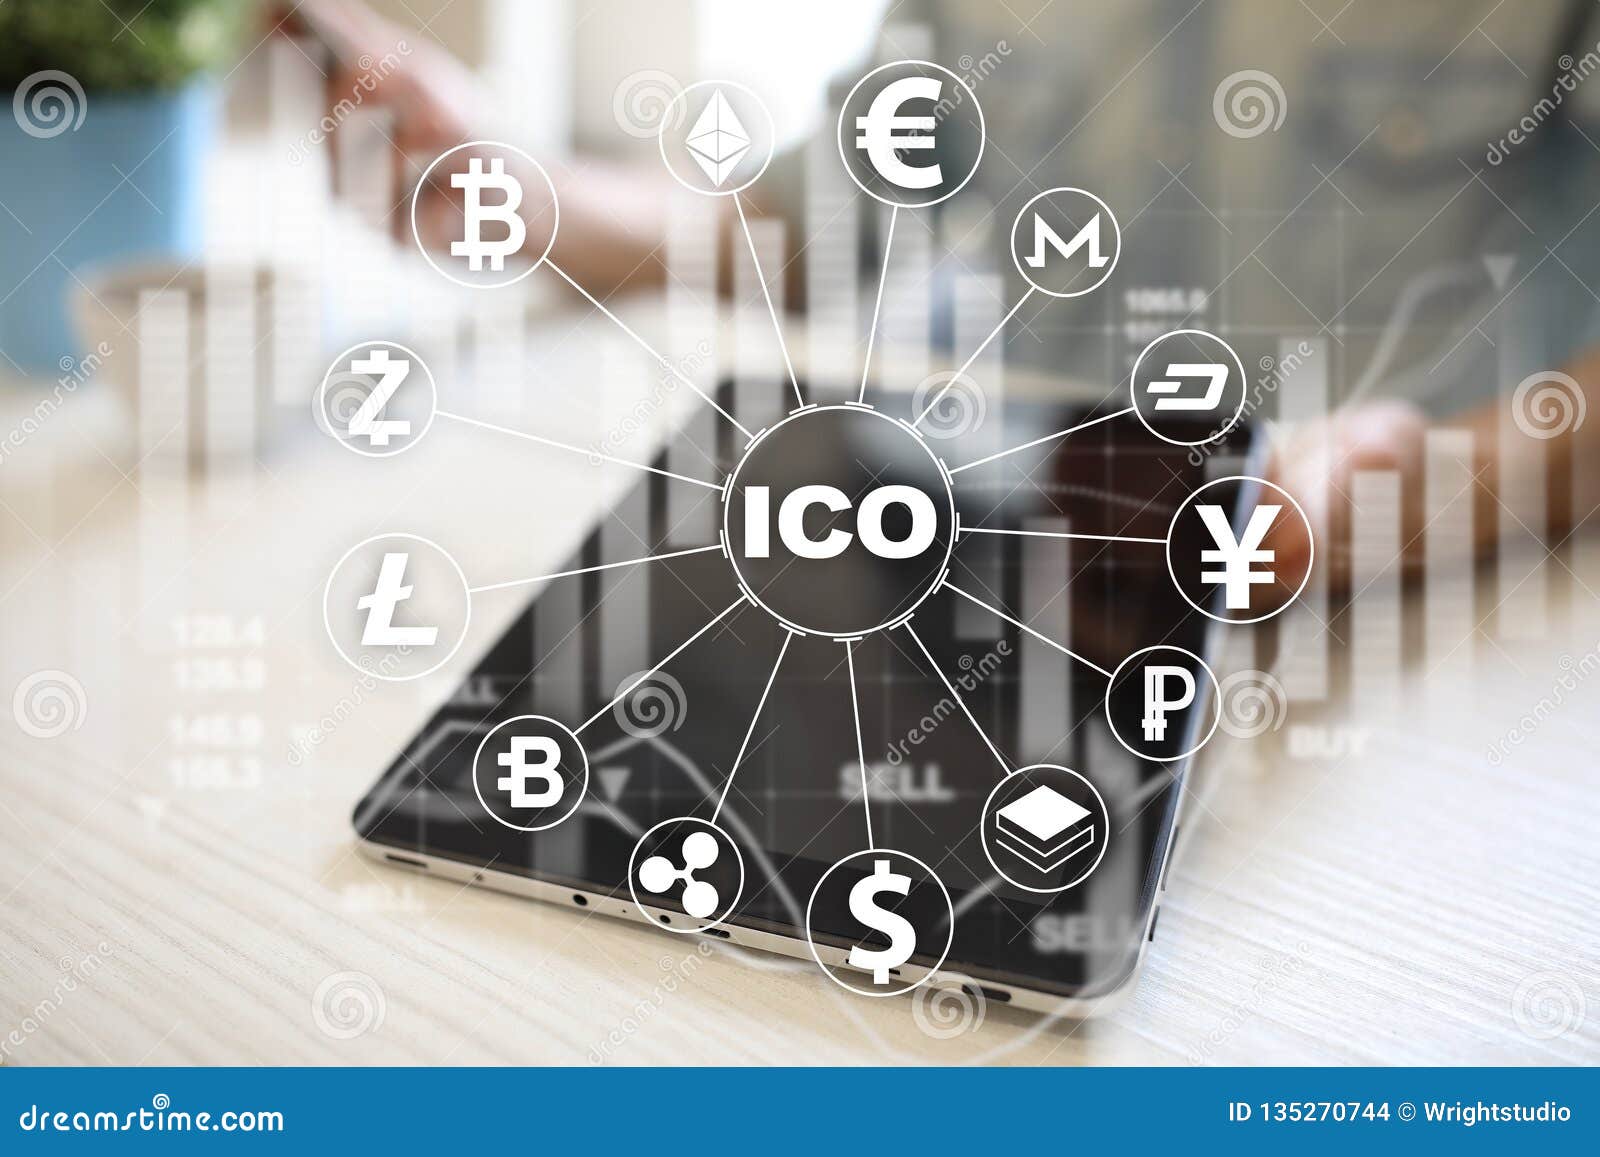 ico bonus crypto currency investmeent